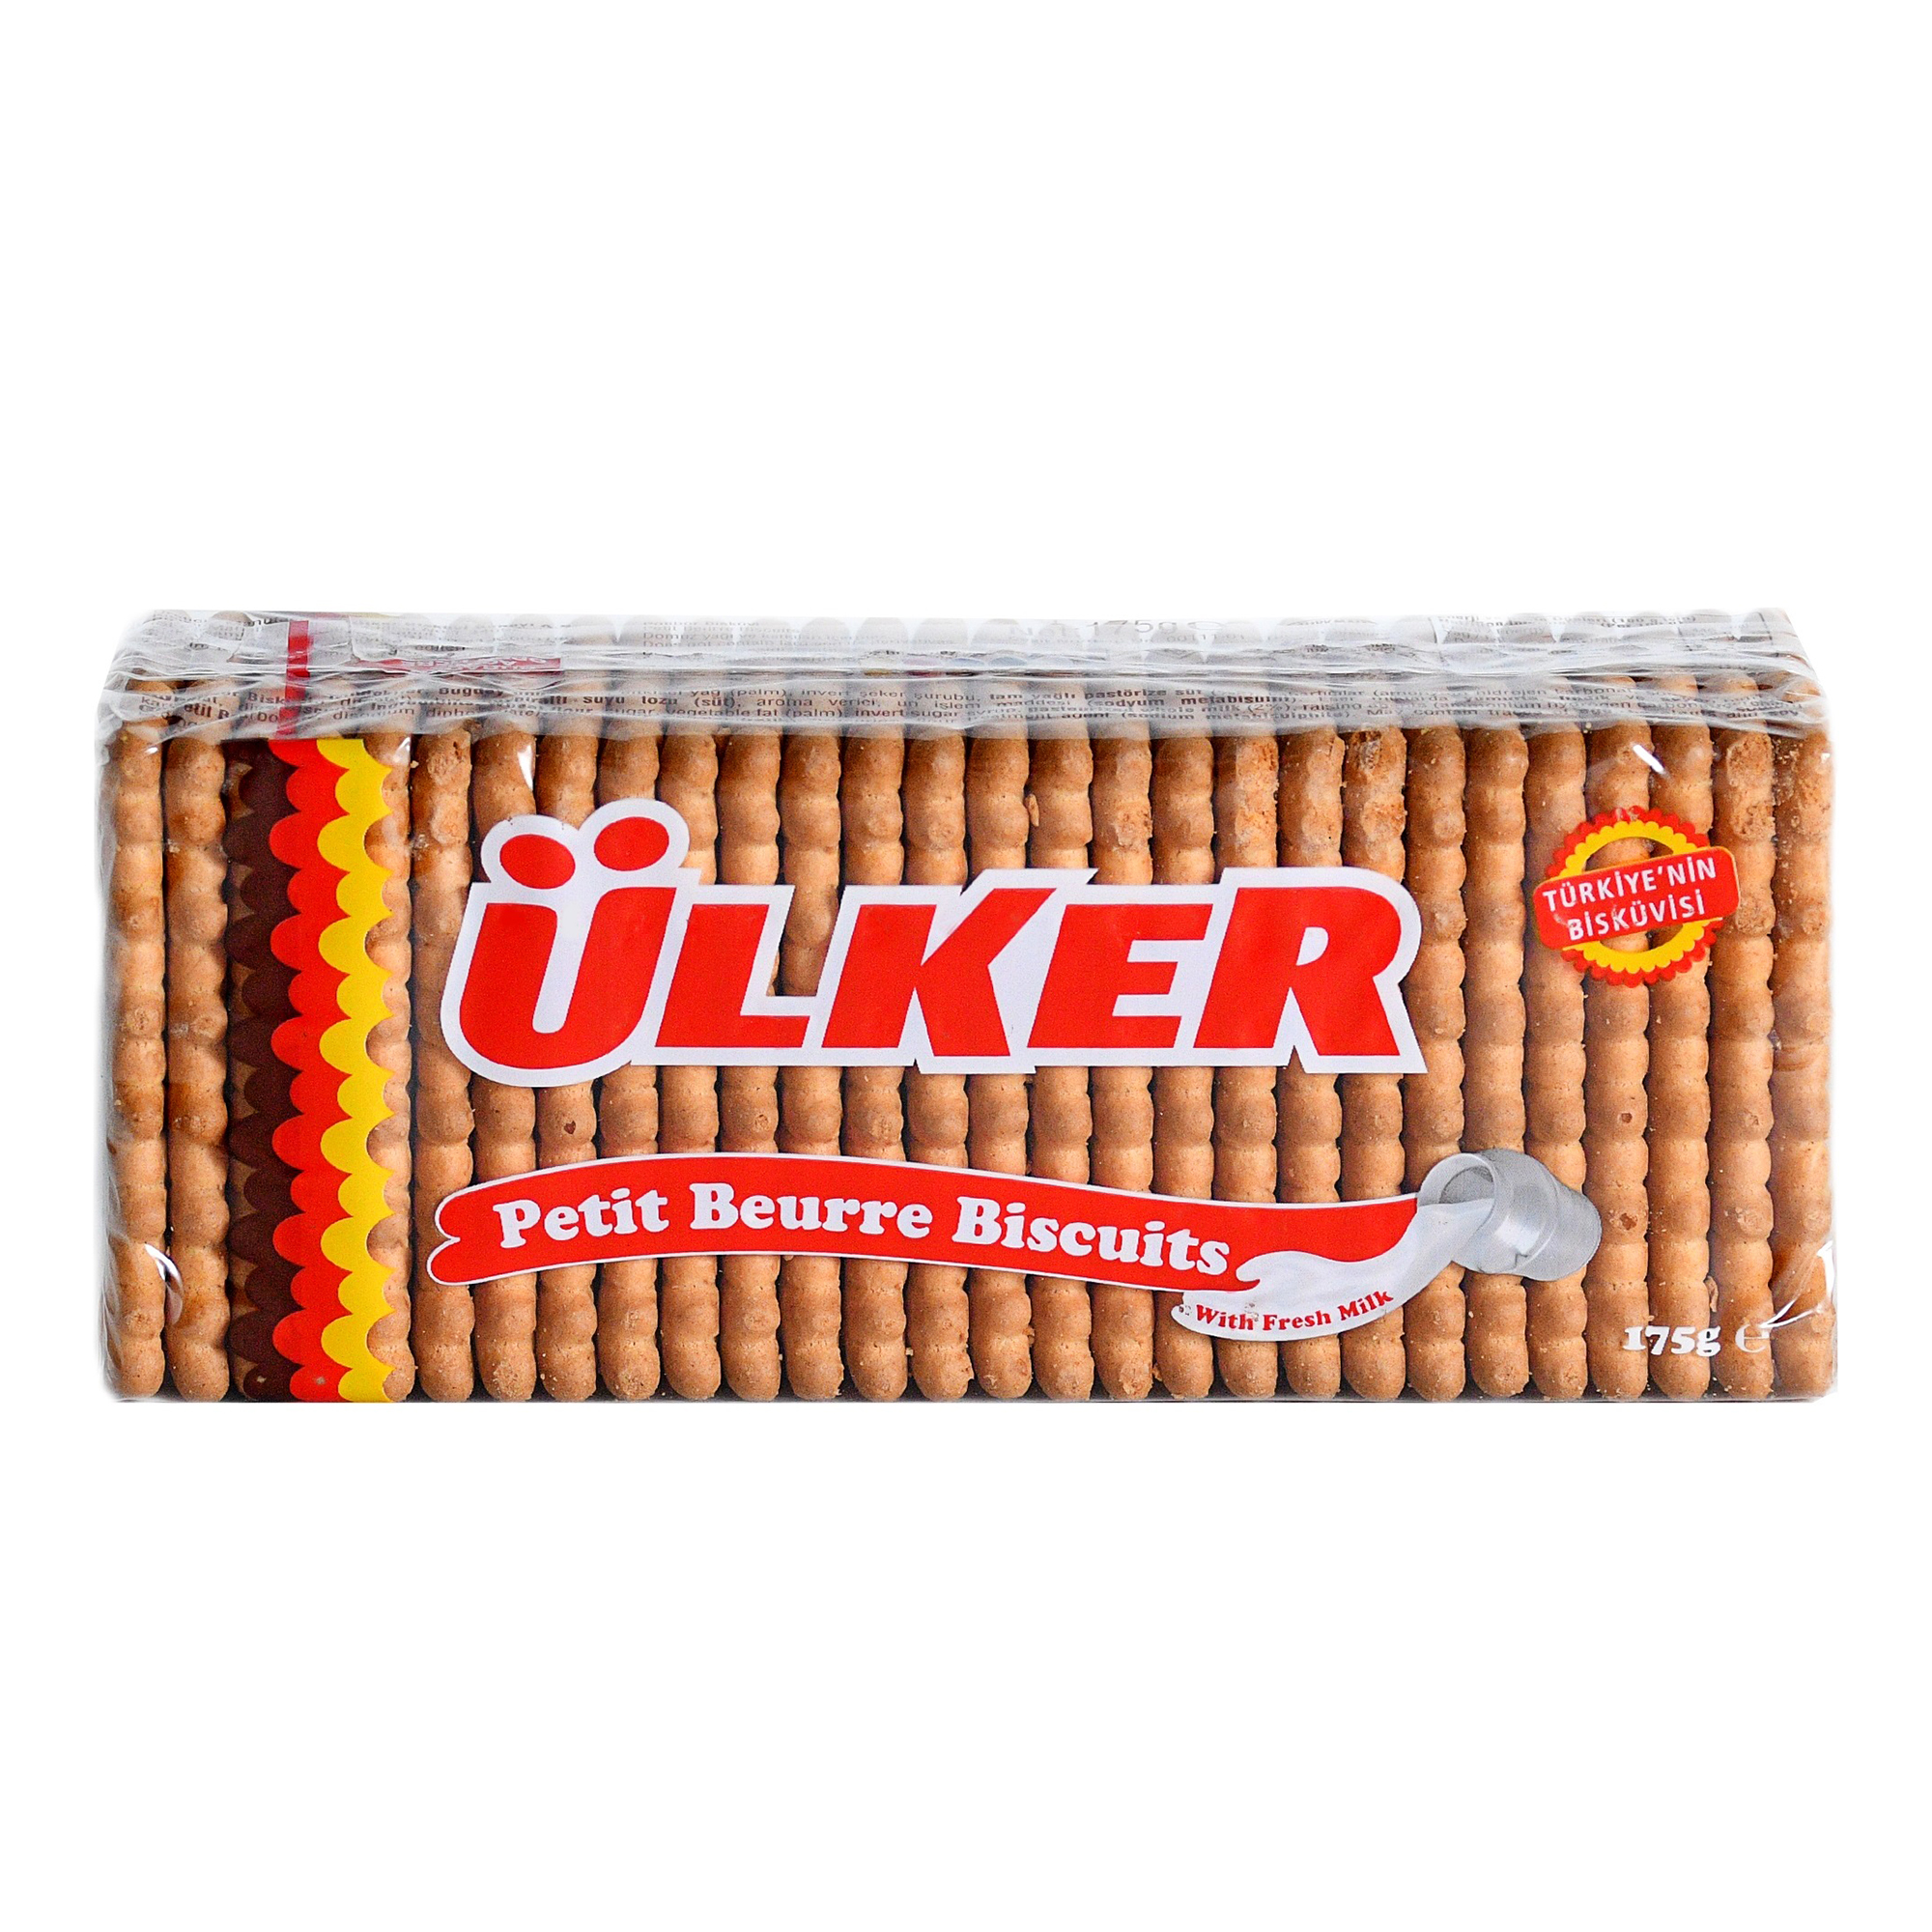 Печенье Ulker Petit Beurre, 175 г печенье ulker petit beurre с шоколадом 175 г